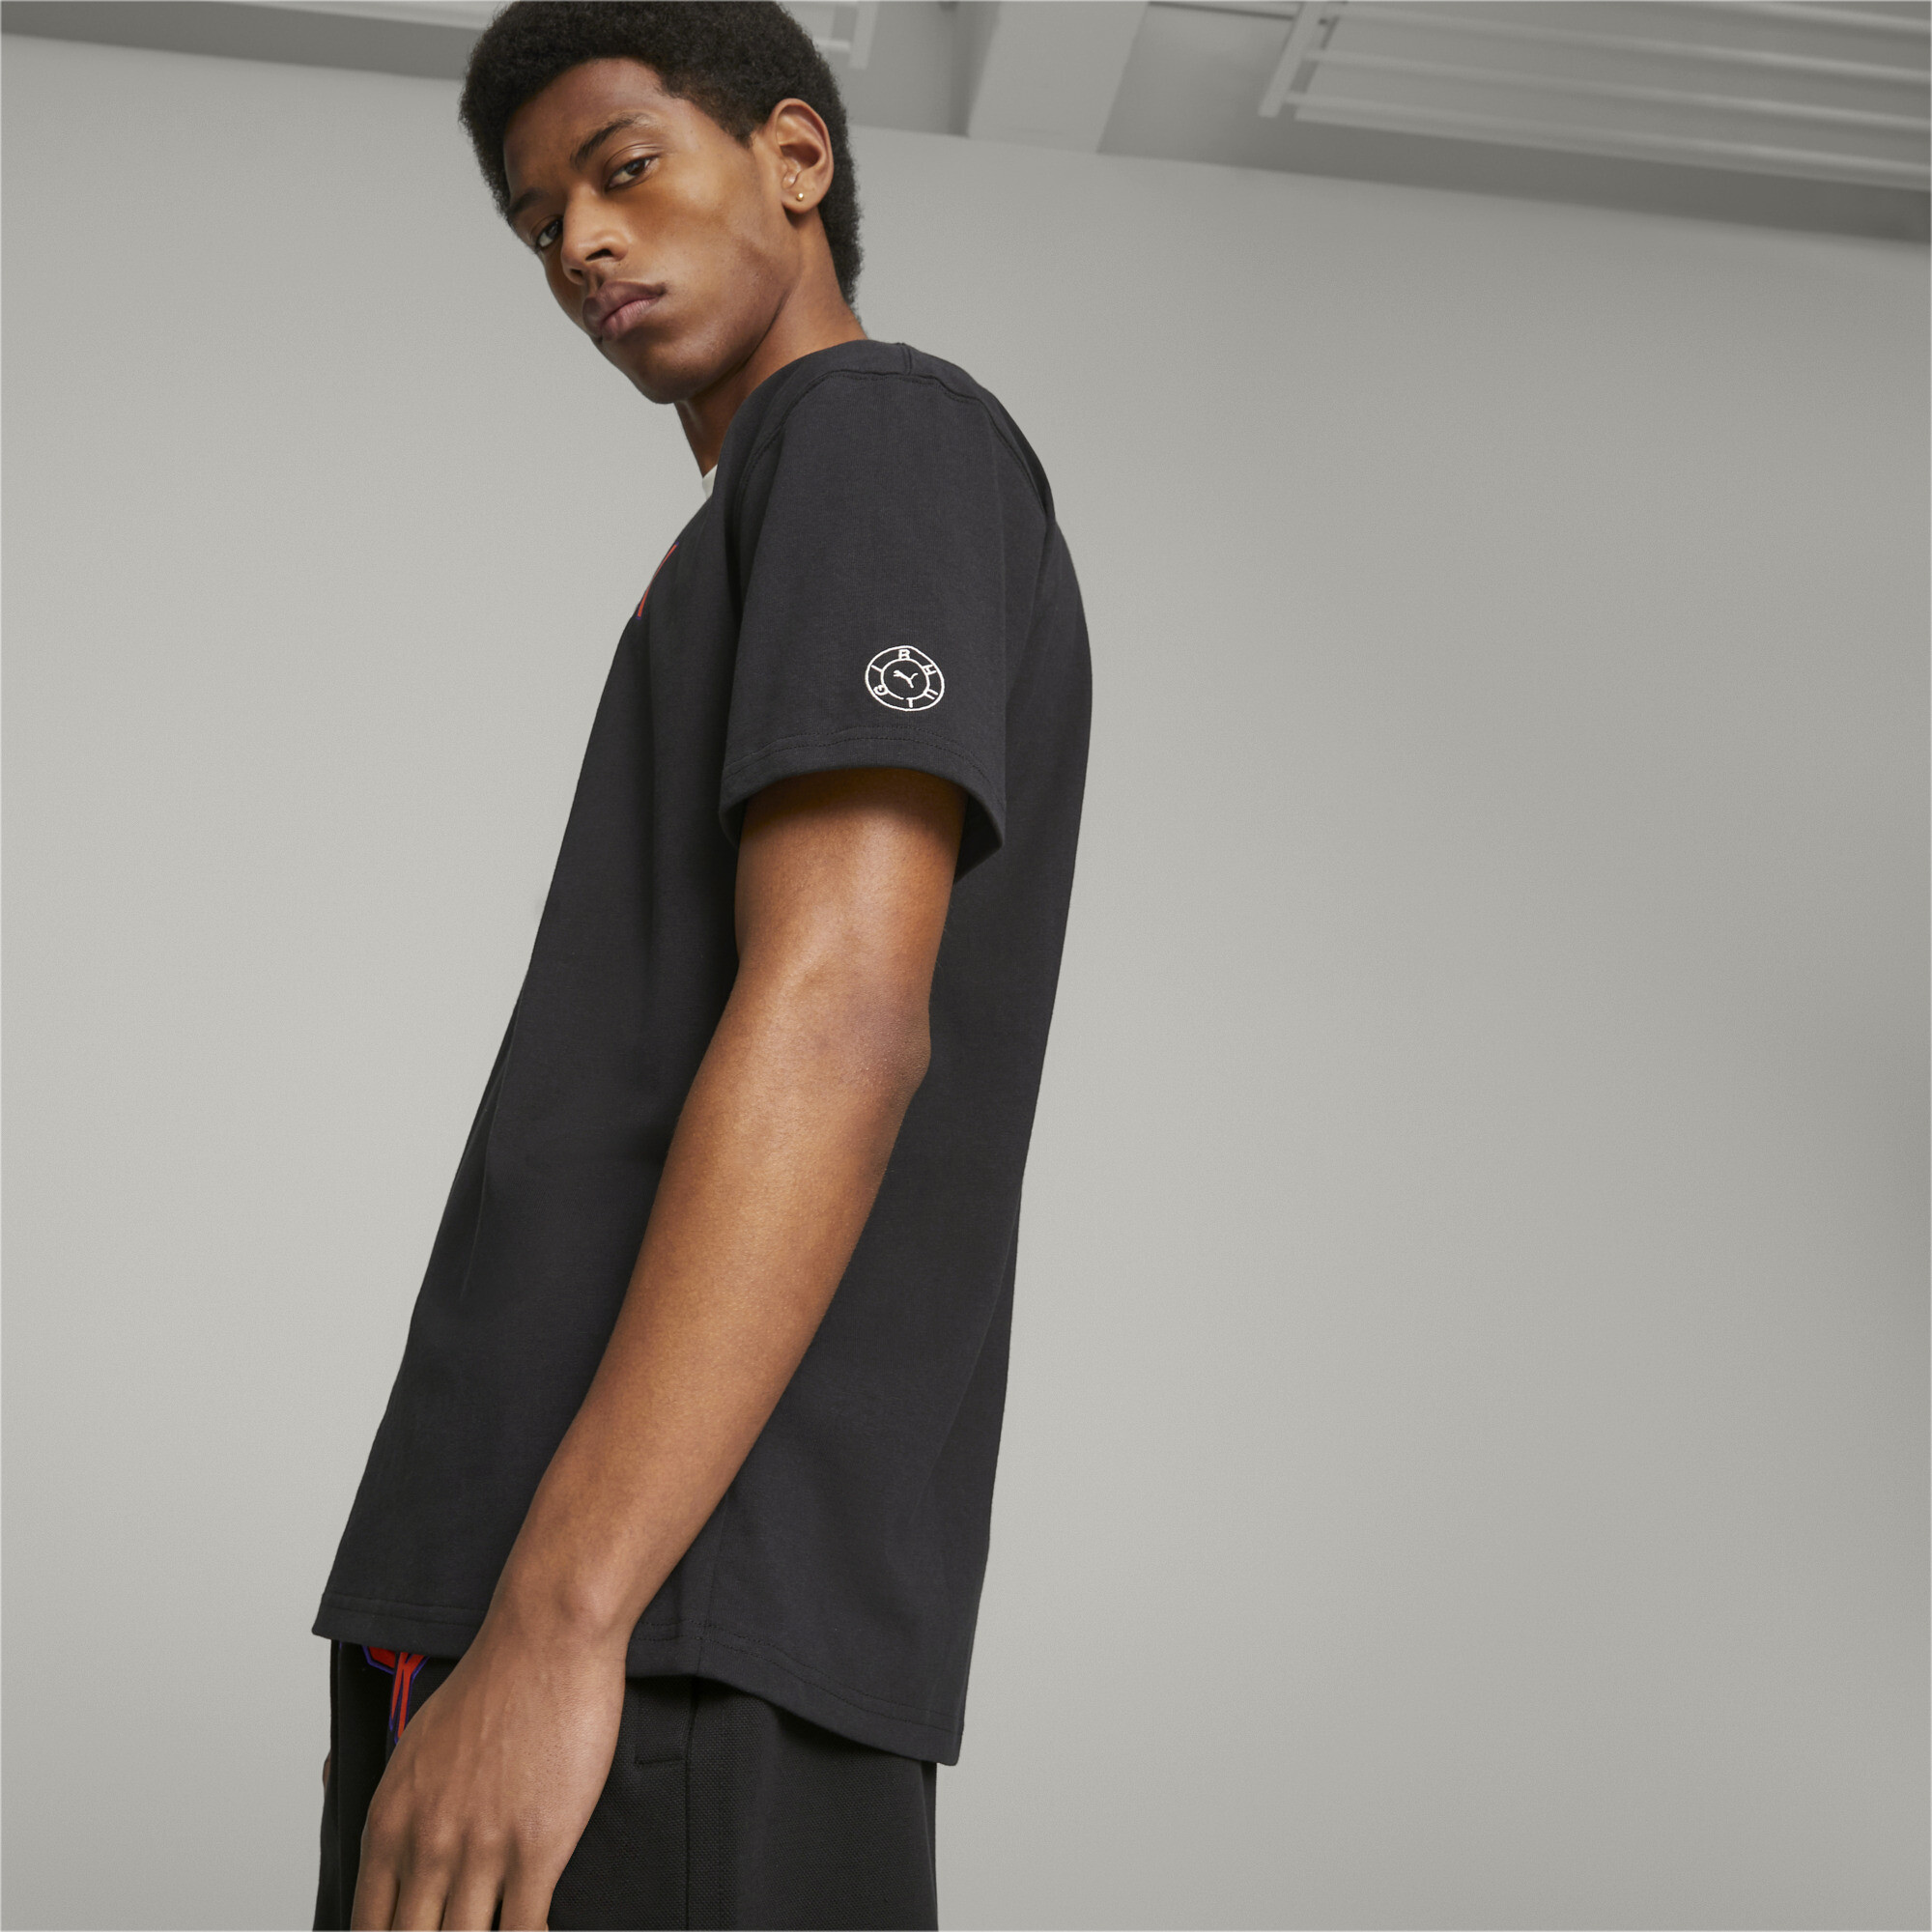 Men's PUMA X RHUIGI Graphic T-Shirt In Black, Size Medium